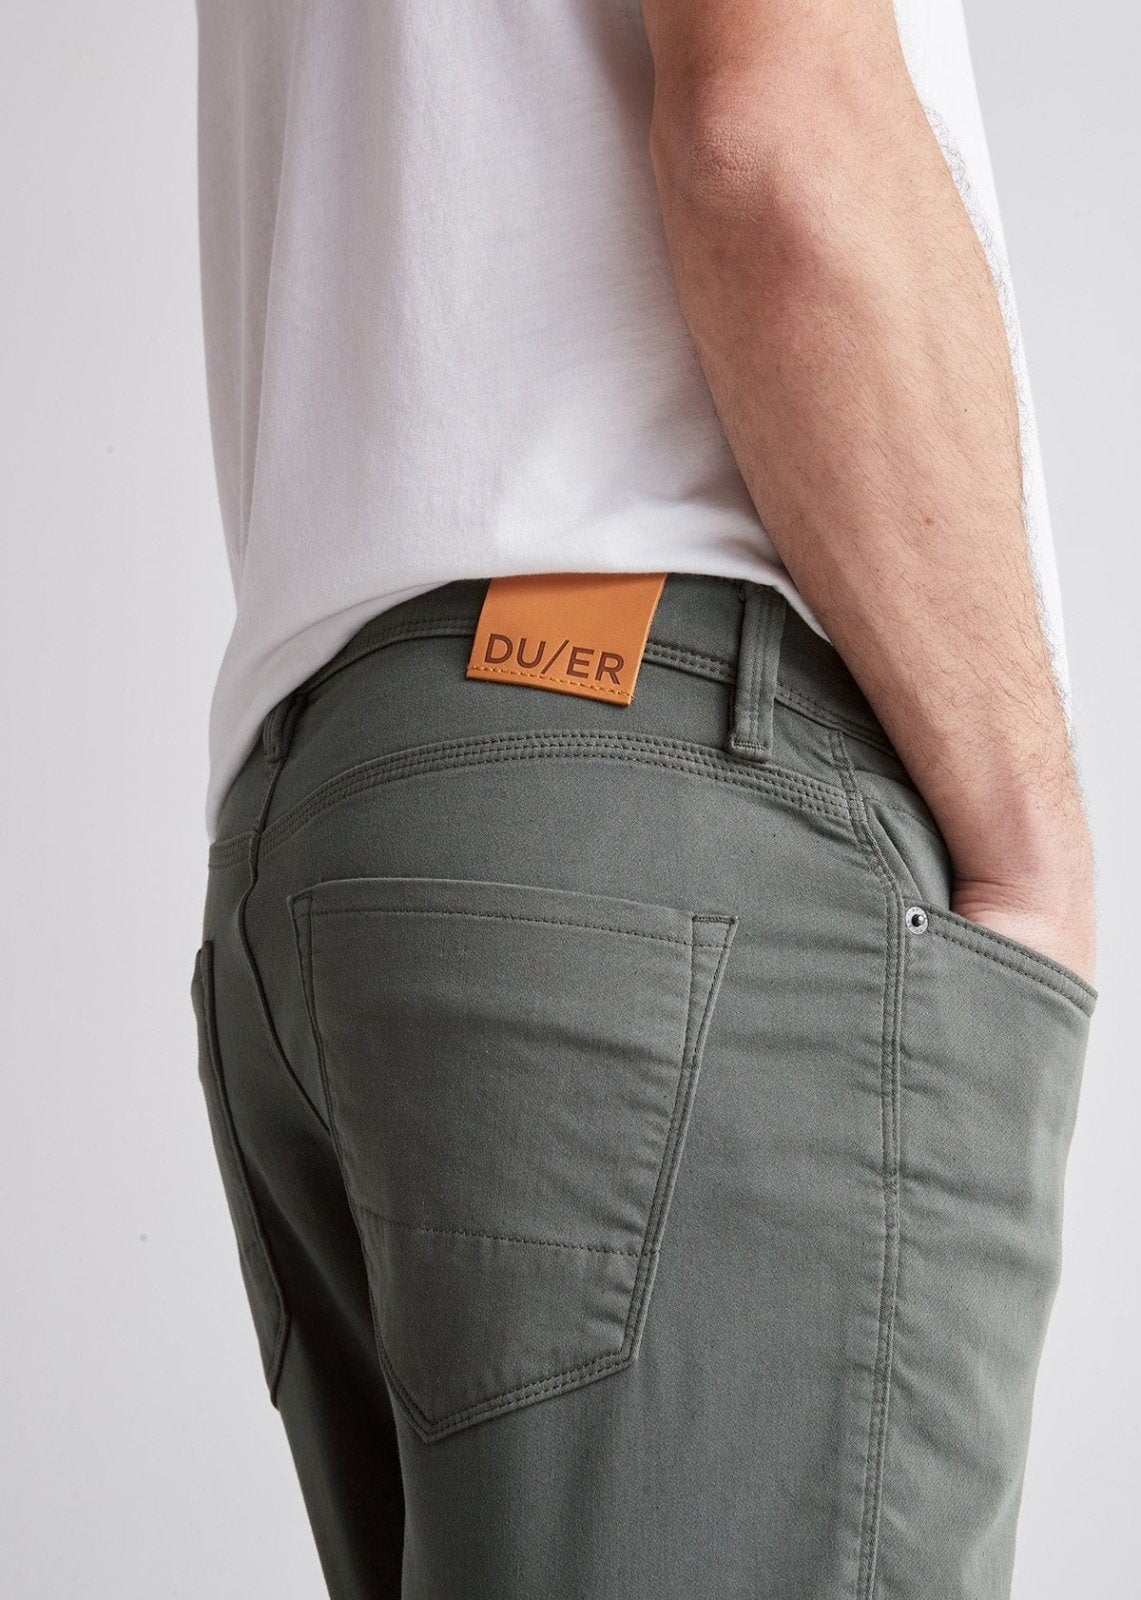 Men's Grey Slim Fit Stretch Short back patch Detail